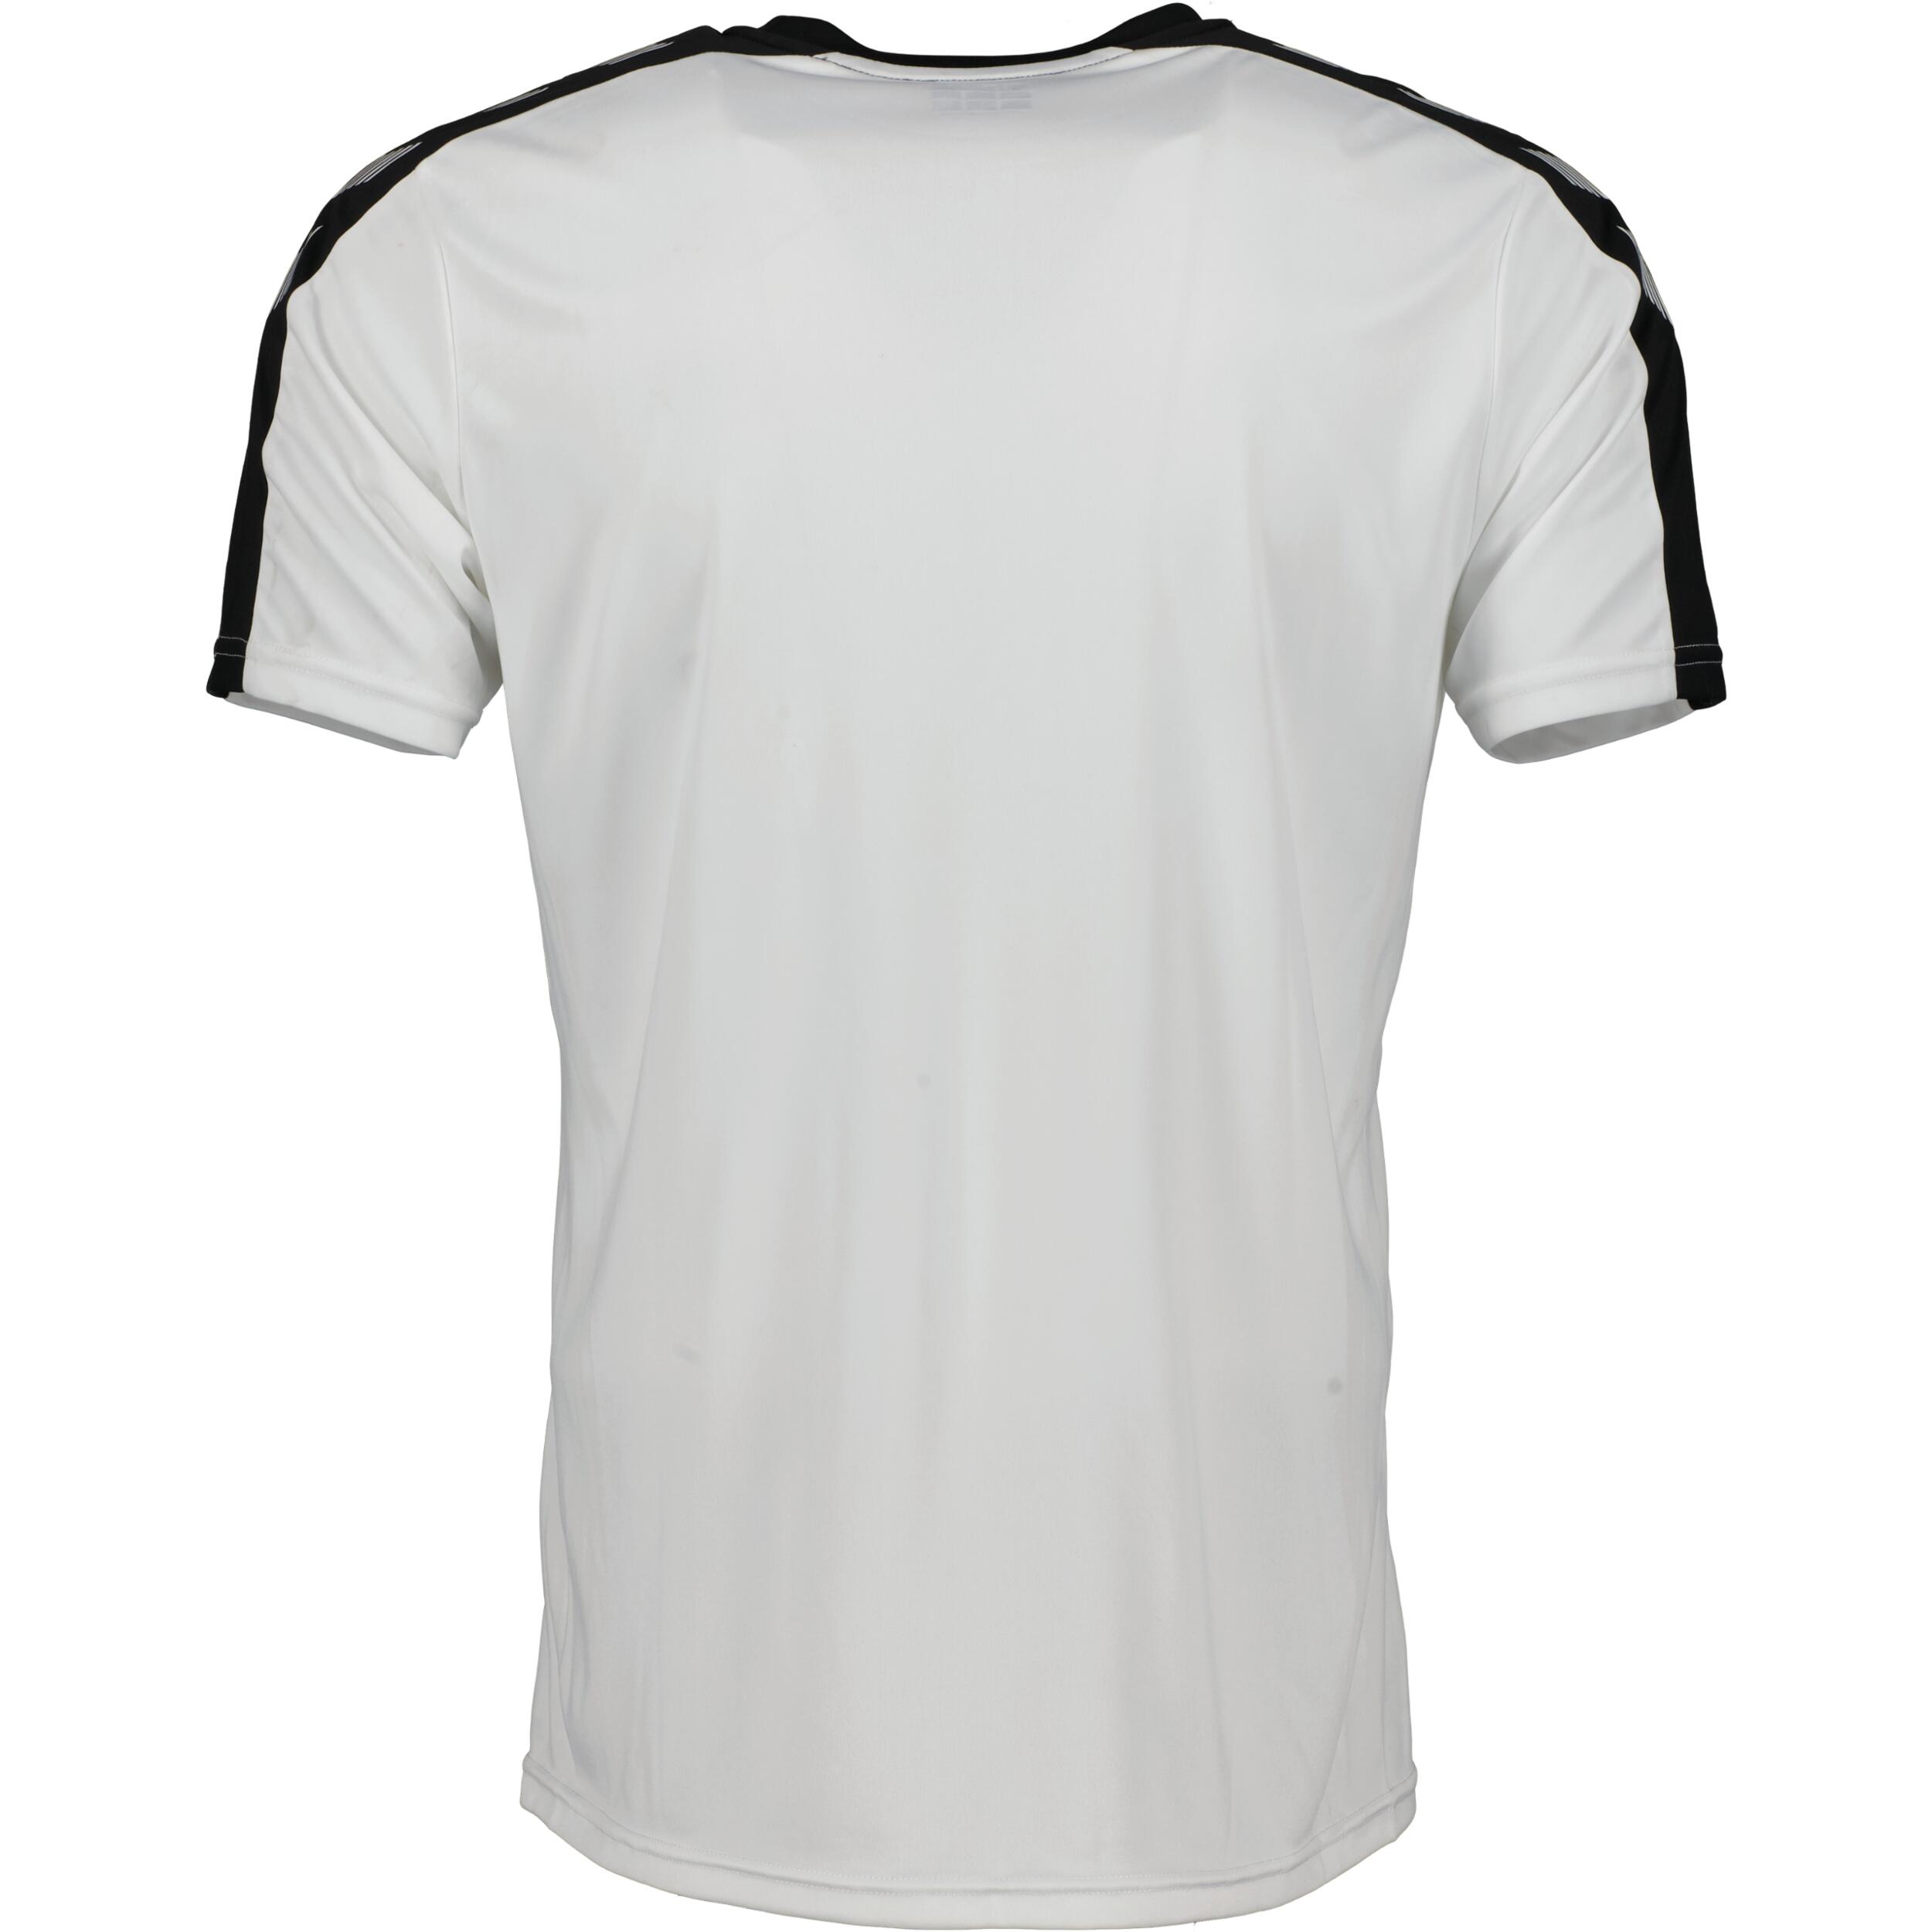 Stripe jersey for men, great for football,  in black/white 2/3